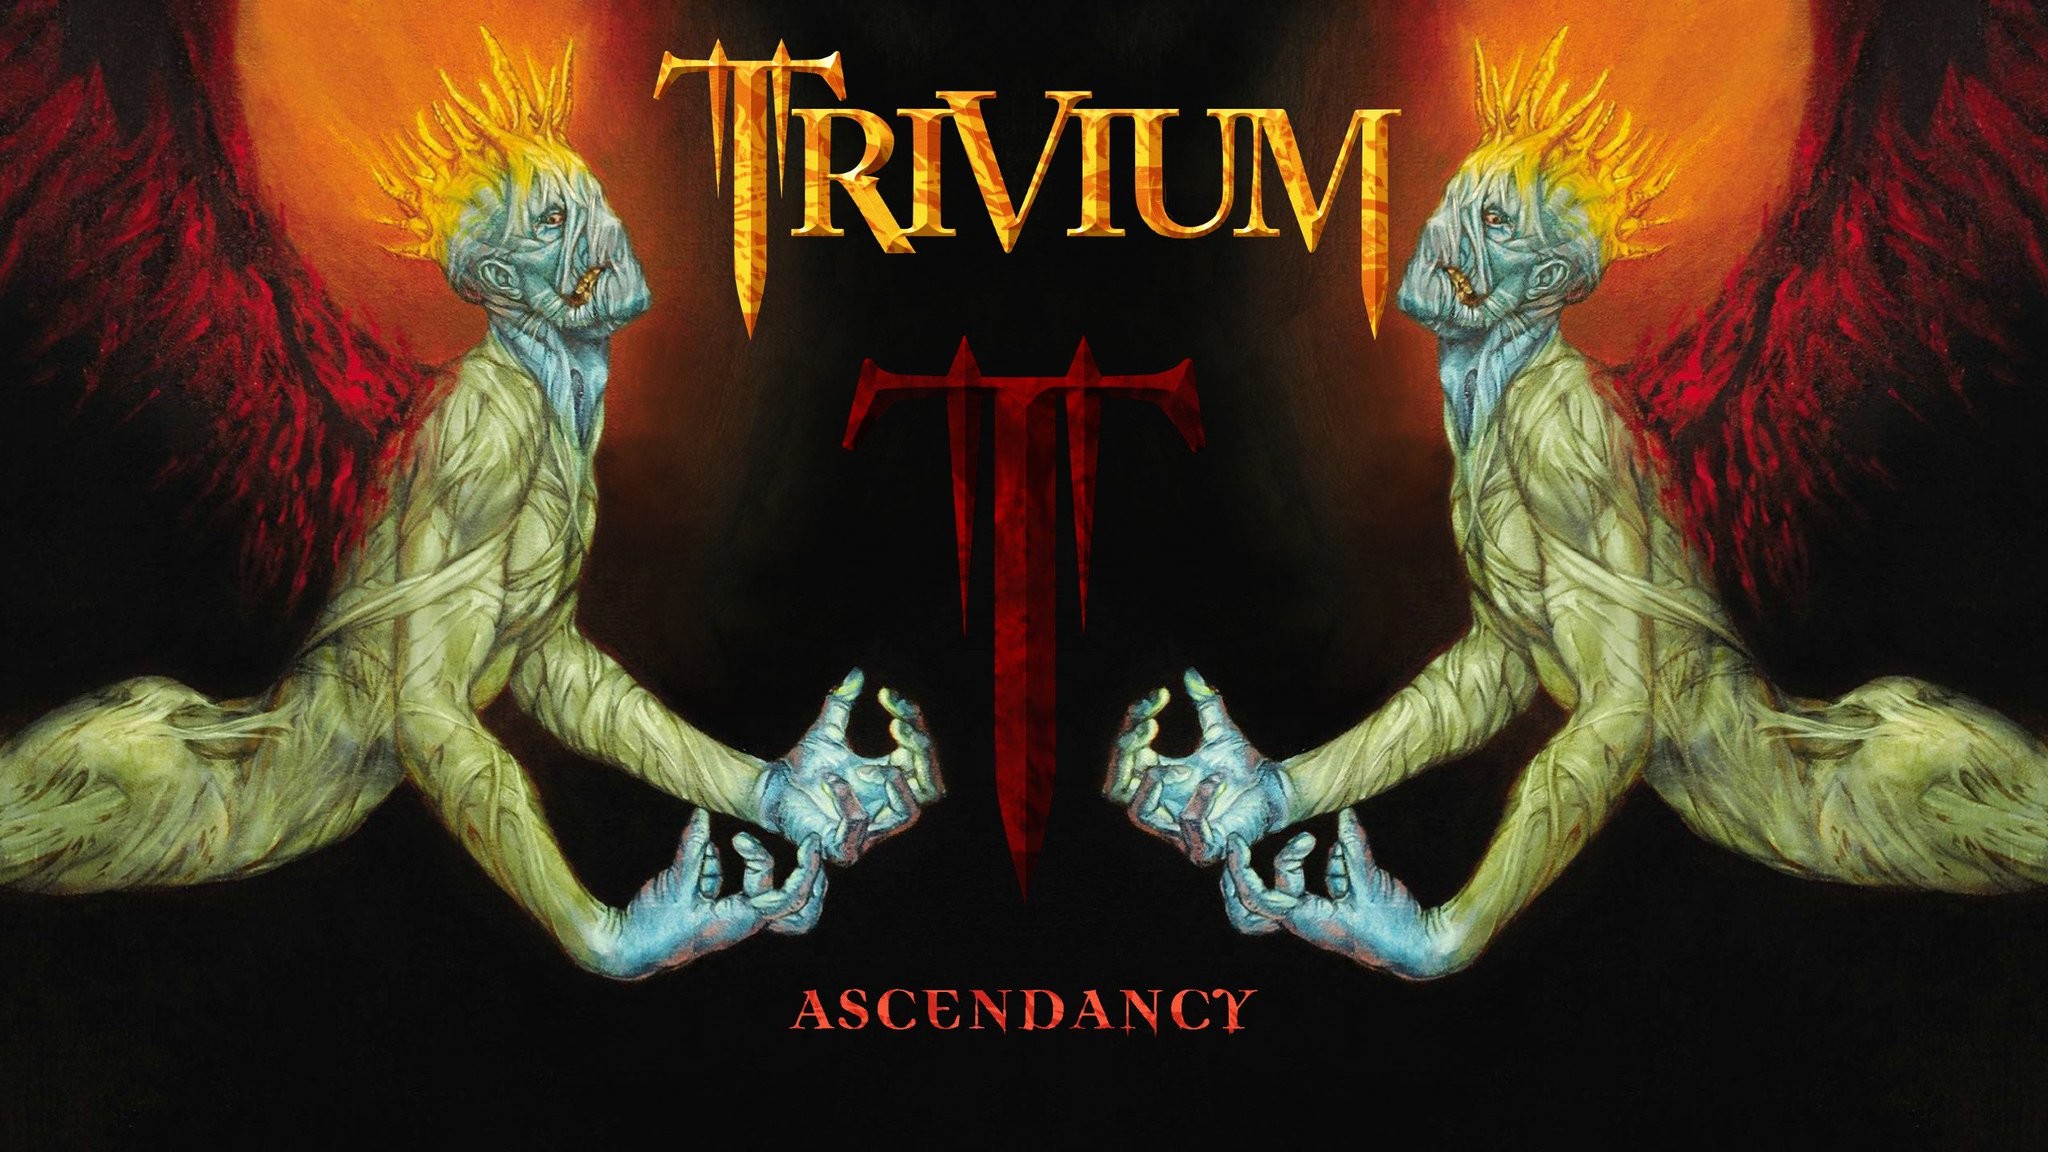 2048x1152 Trivium Memes on Twitter: "Awesome Ascendancy wallpaper :) @matthewkheafy  @TriviumPaolo #Trivium #TriviumMemes #wallpaper https://t.co/4oGZ5ovGj2"